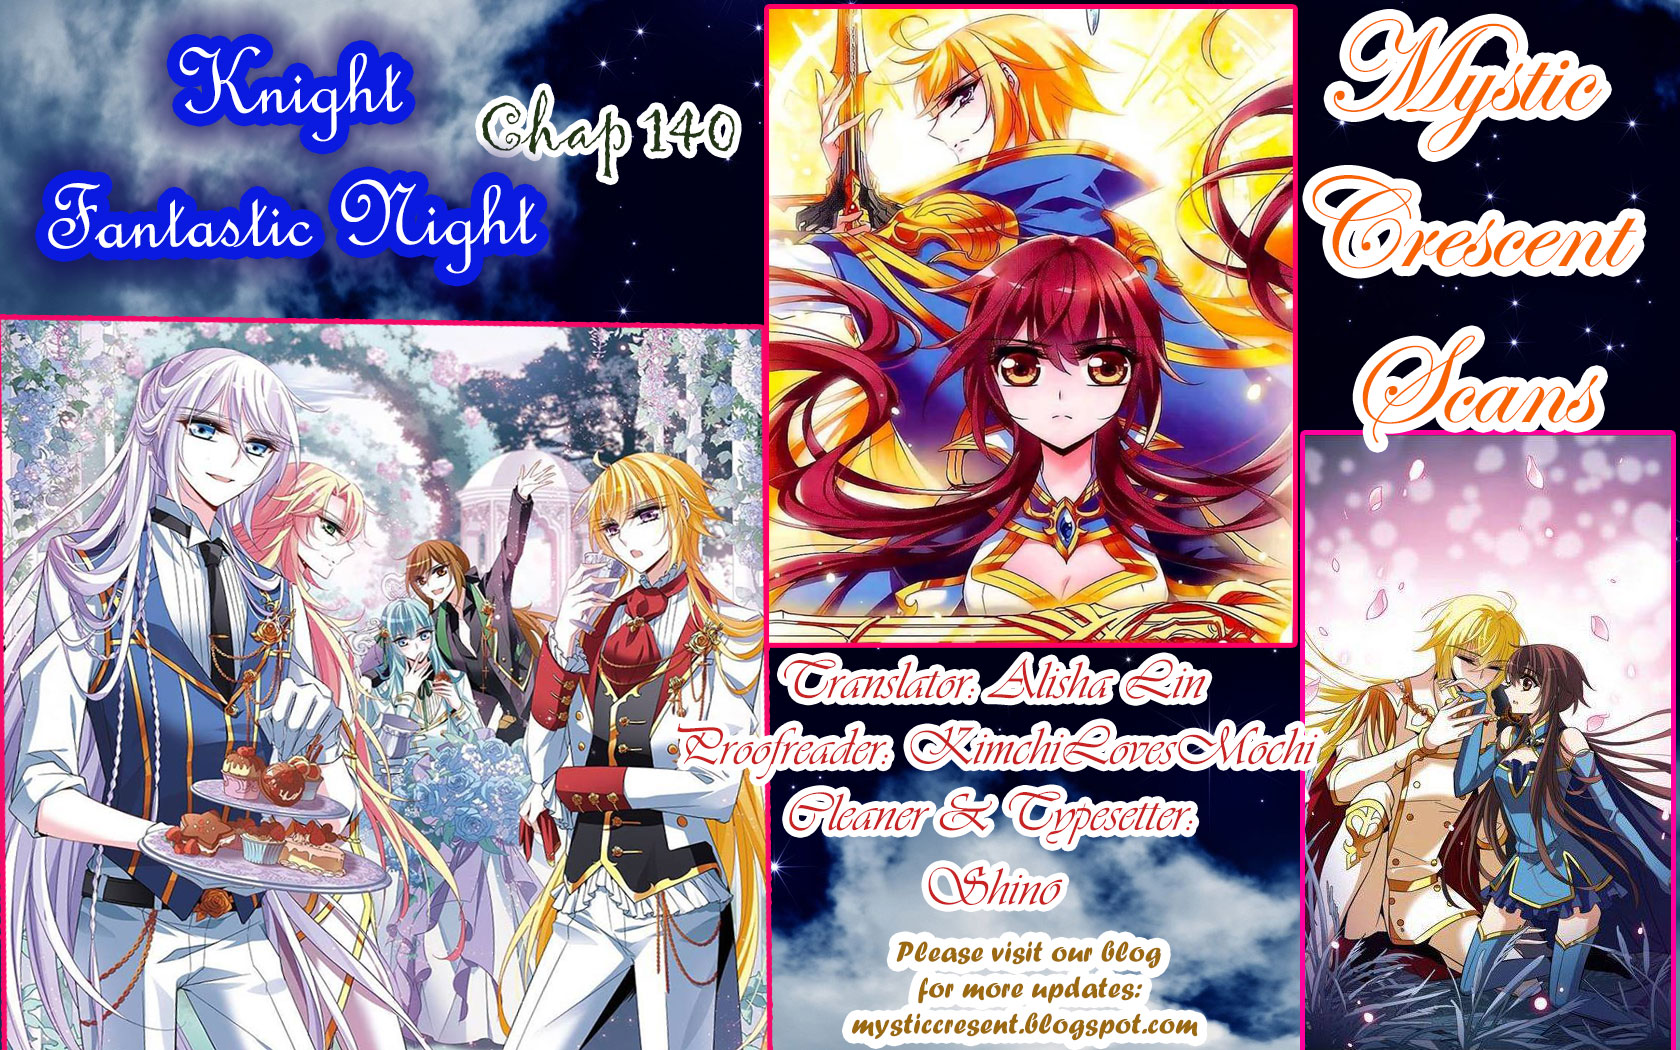 Knight Fantastic Night Ch.140